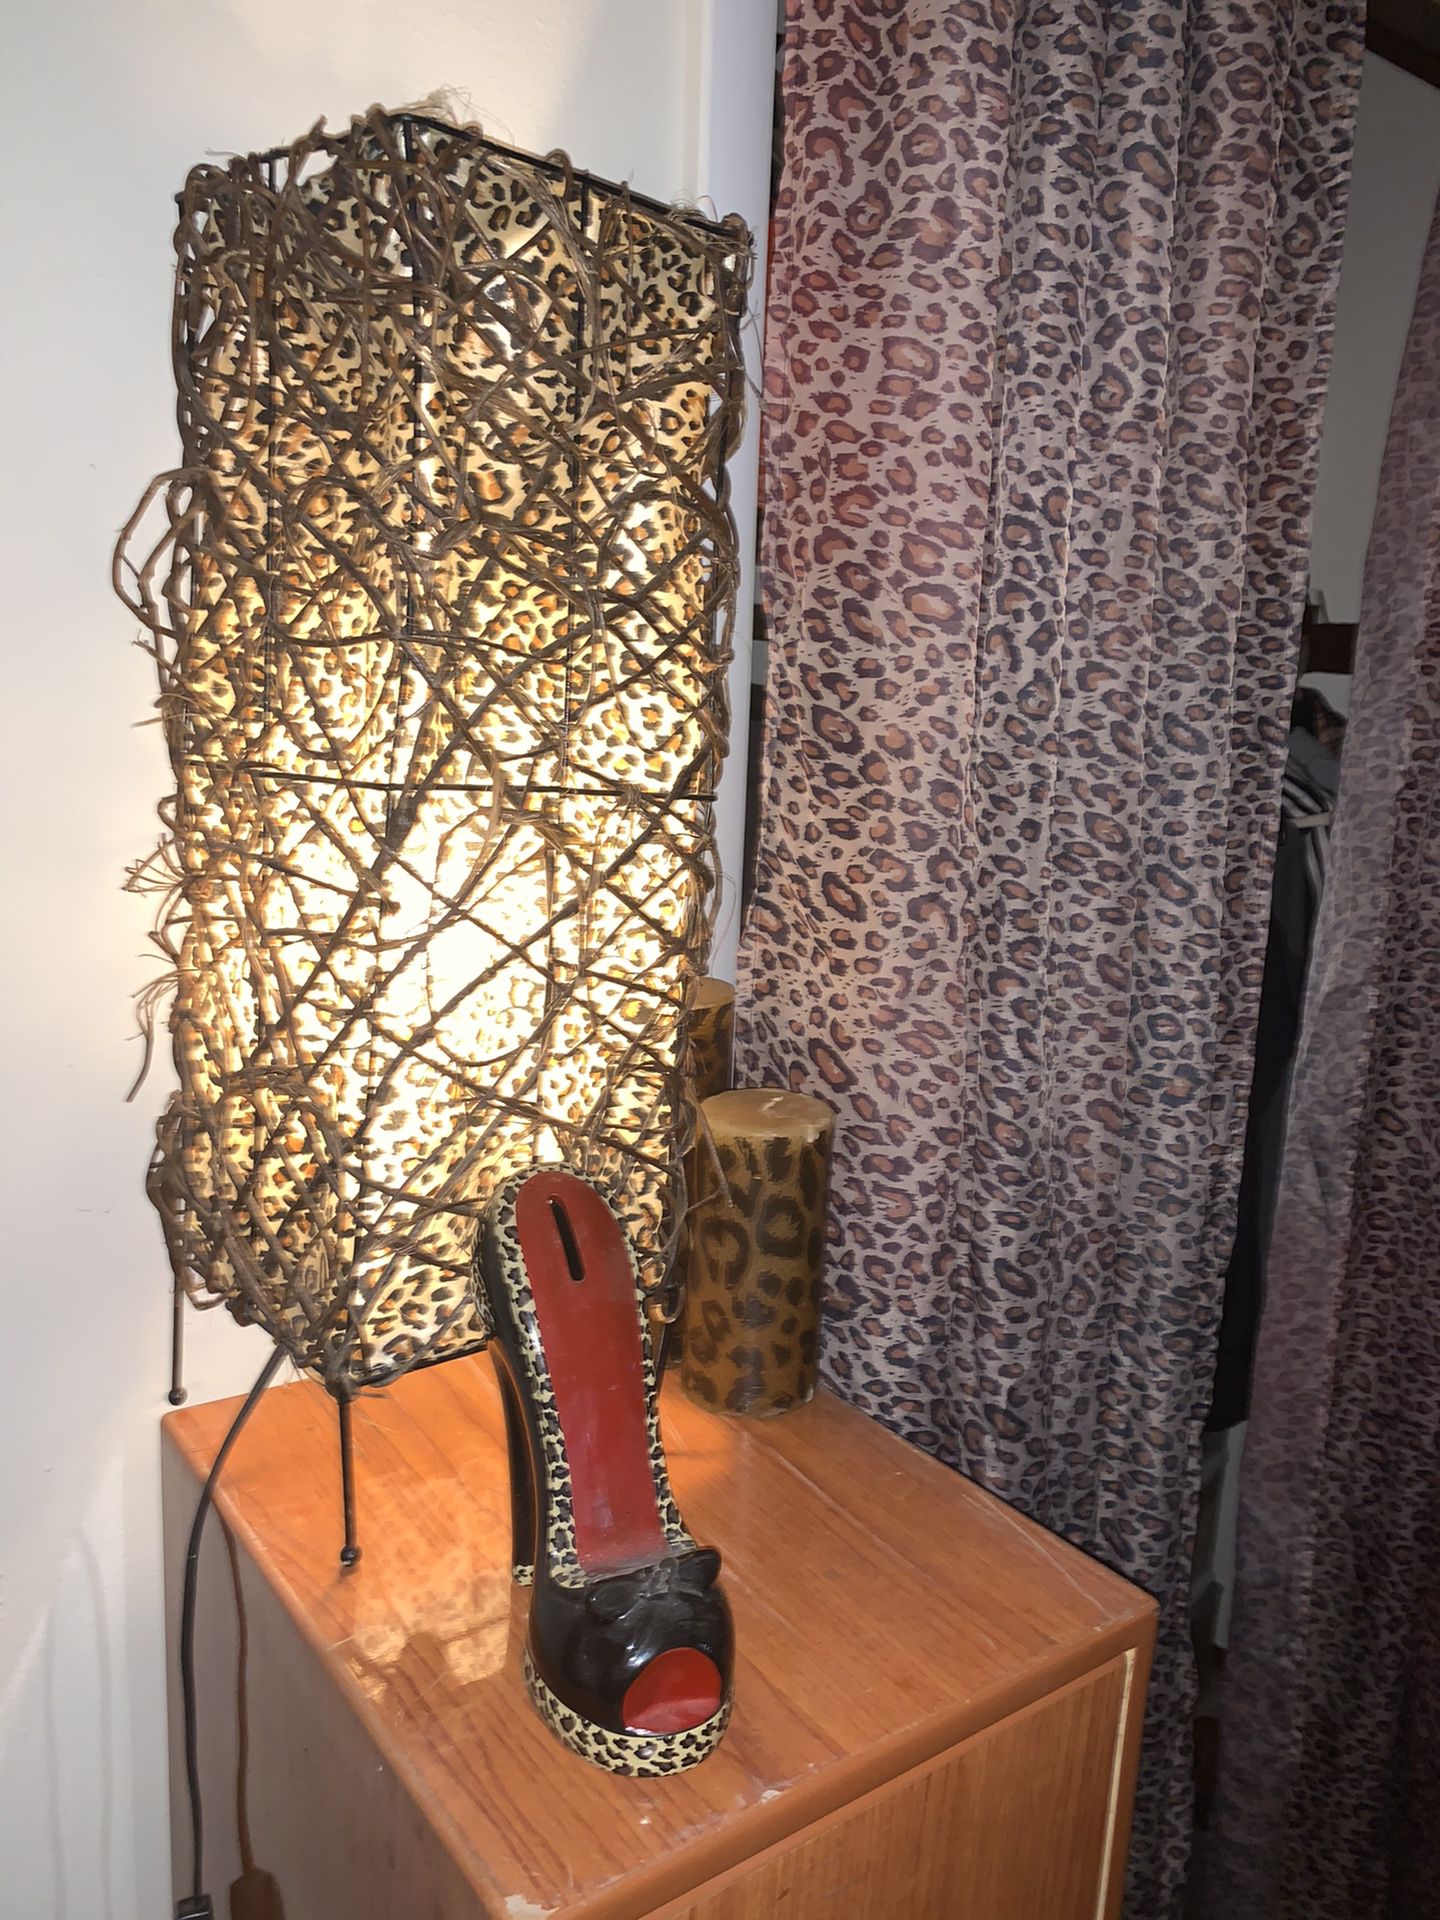 Animal leopard cheetah print Lamp, candle, and coin bank decor set